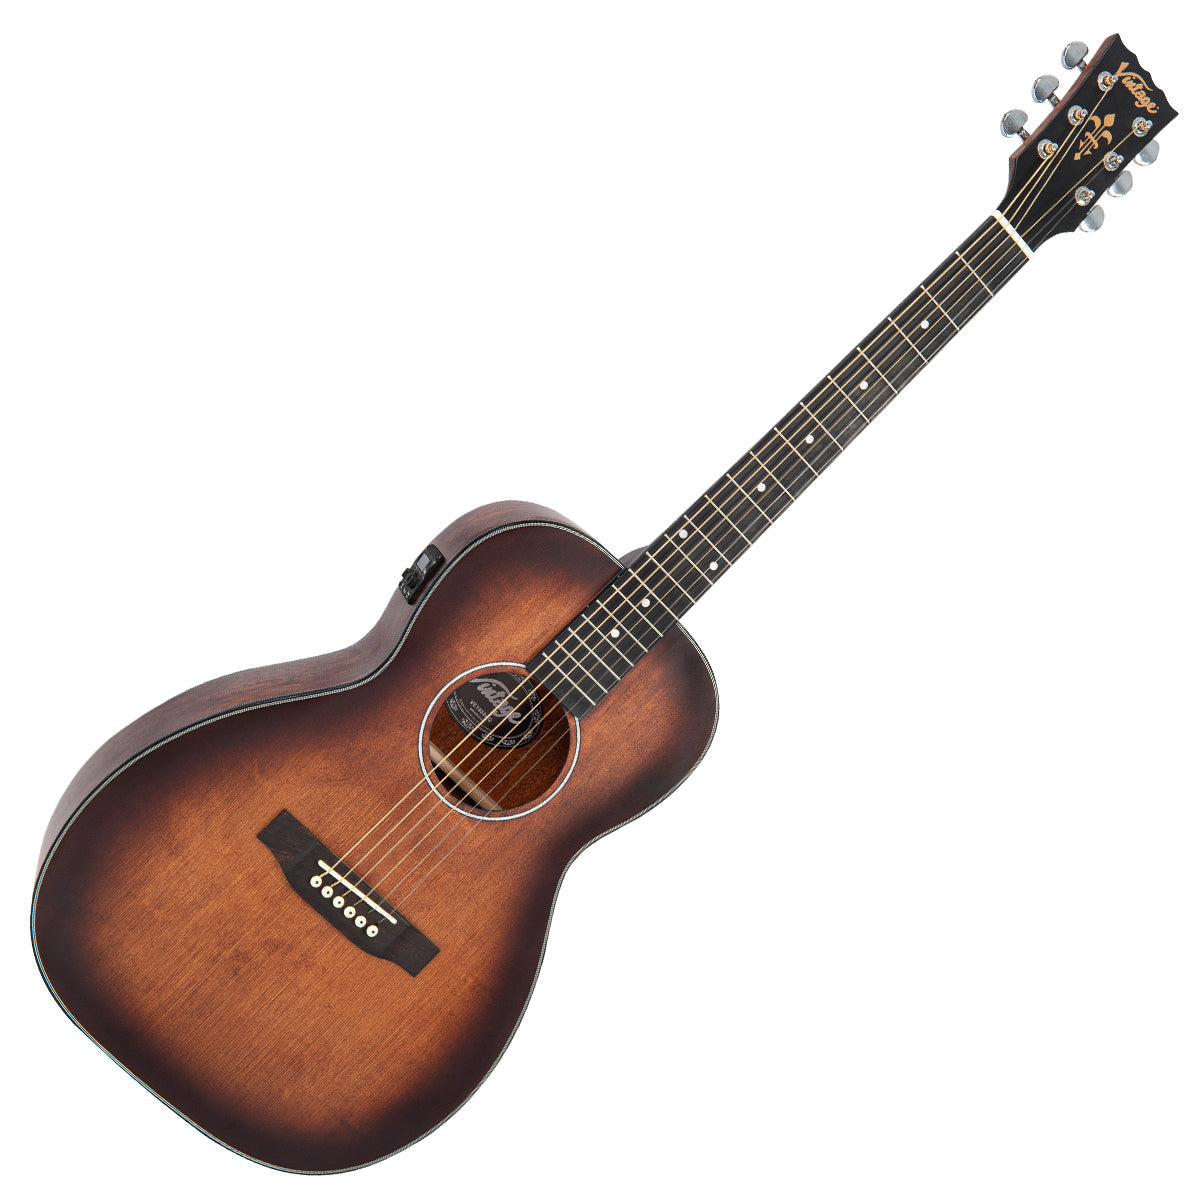 Vintage Stage Series 'Parlour' Electro-Acoustic Guitar ~ Antiqued, Electric Acoustic Guitars for sale at Richards Guitars.